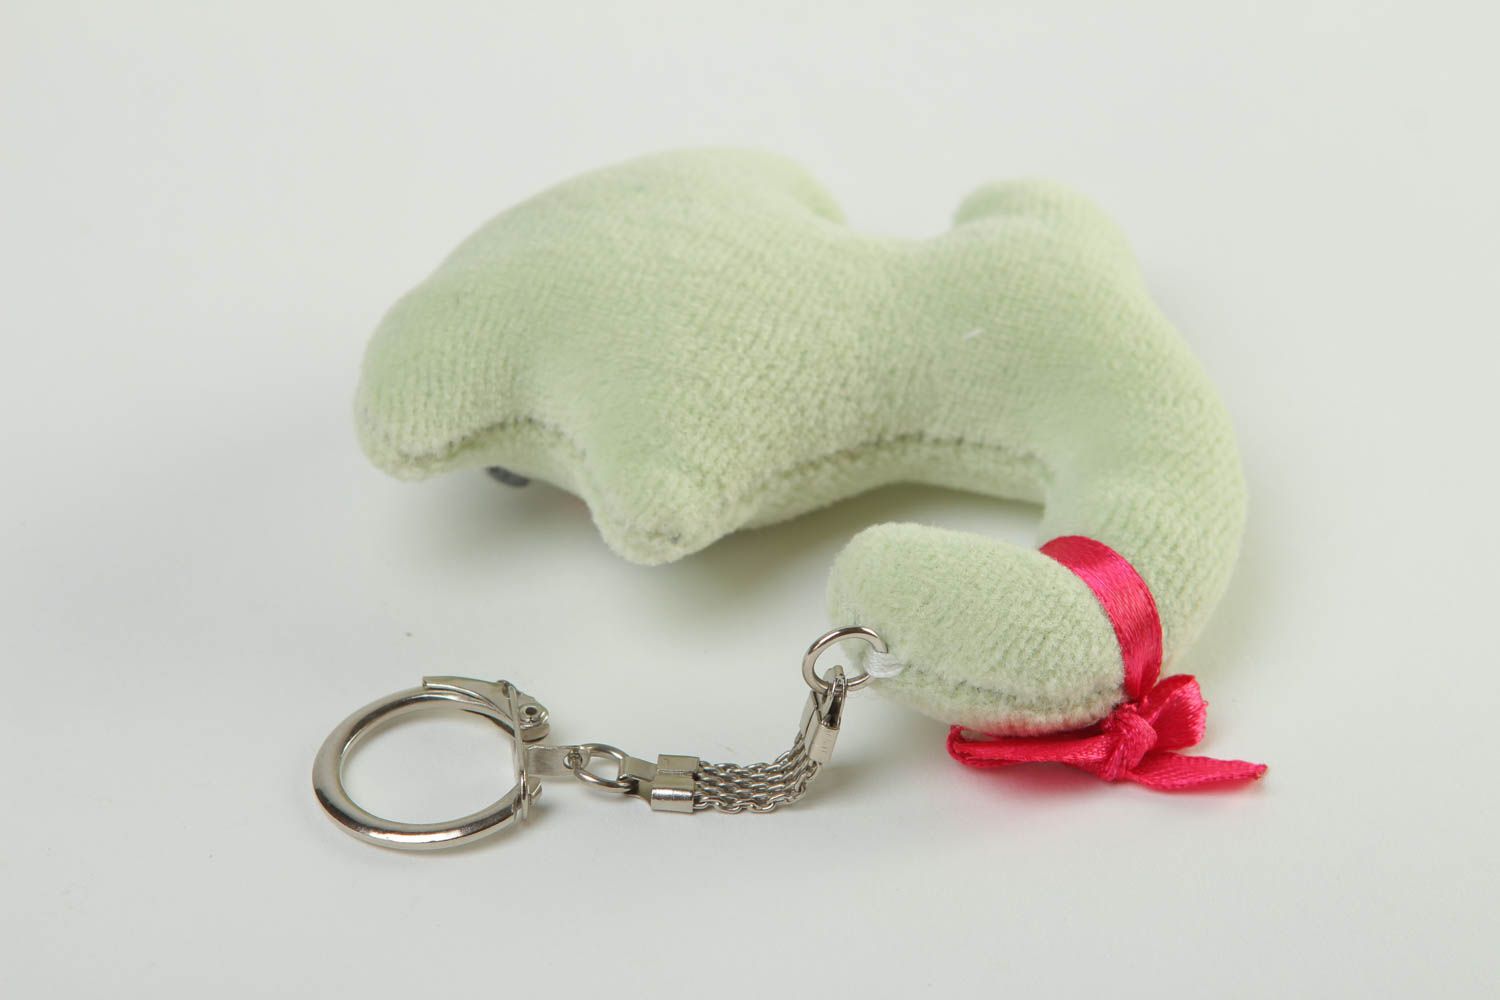 Unusual handmade fabric soft toy keychain best keychain for kids gift ideas photo 4